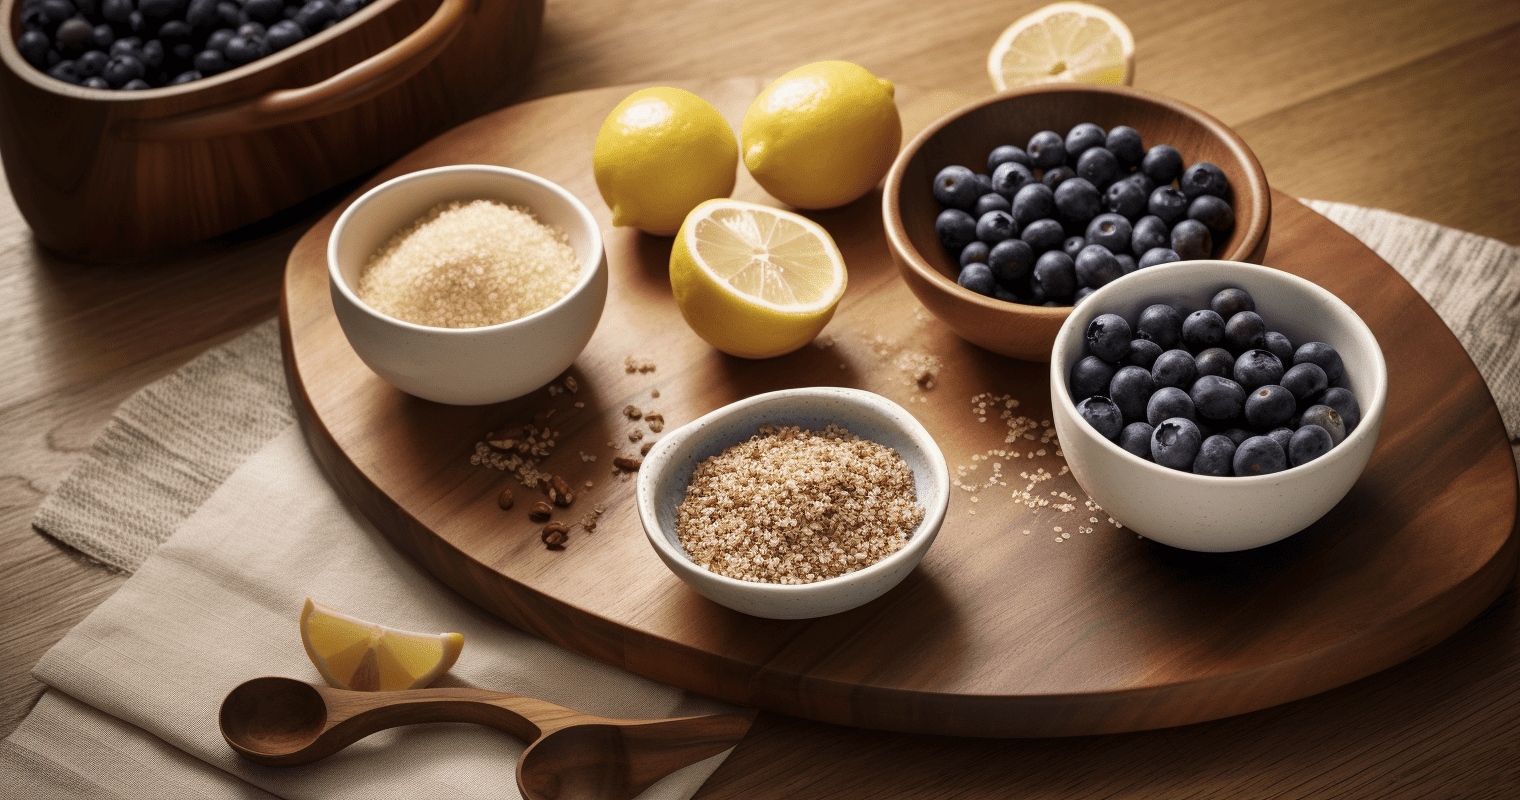 Lemon Blueberry Quinoa Muffins Ingredients